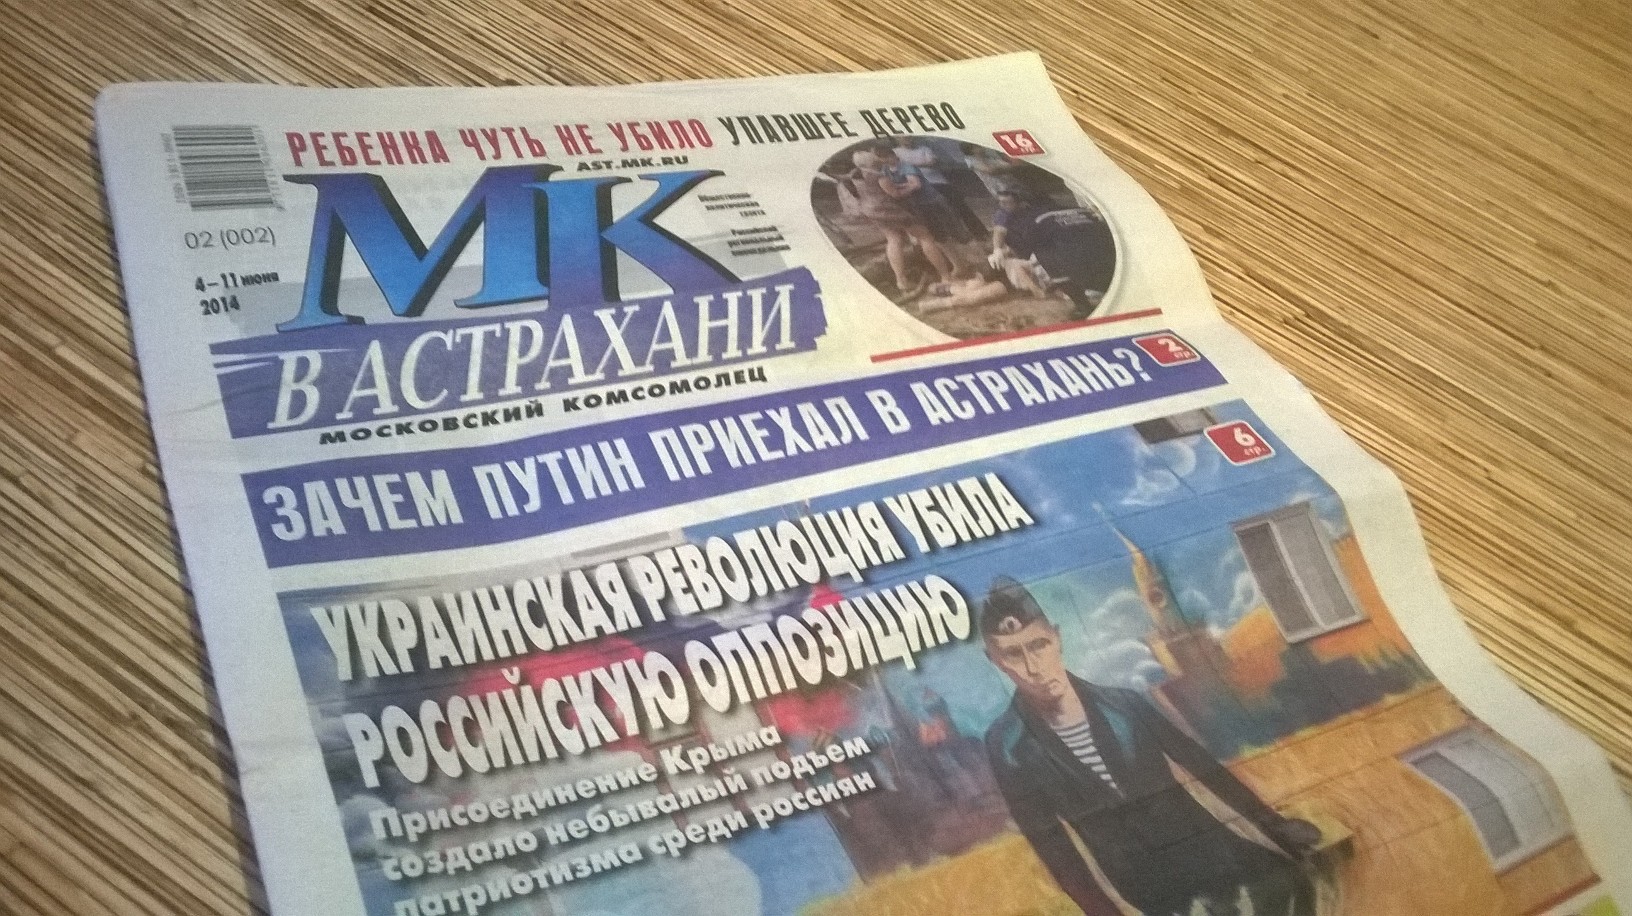 images novosti2 MK wp 20140606 005 "МК в Астрахани" полюбился астраханцам